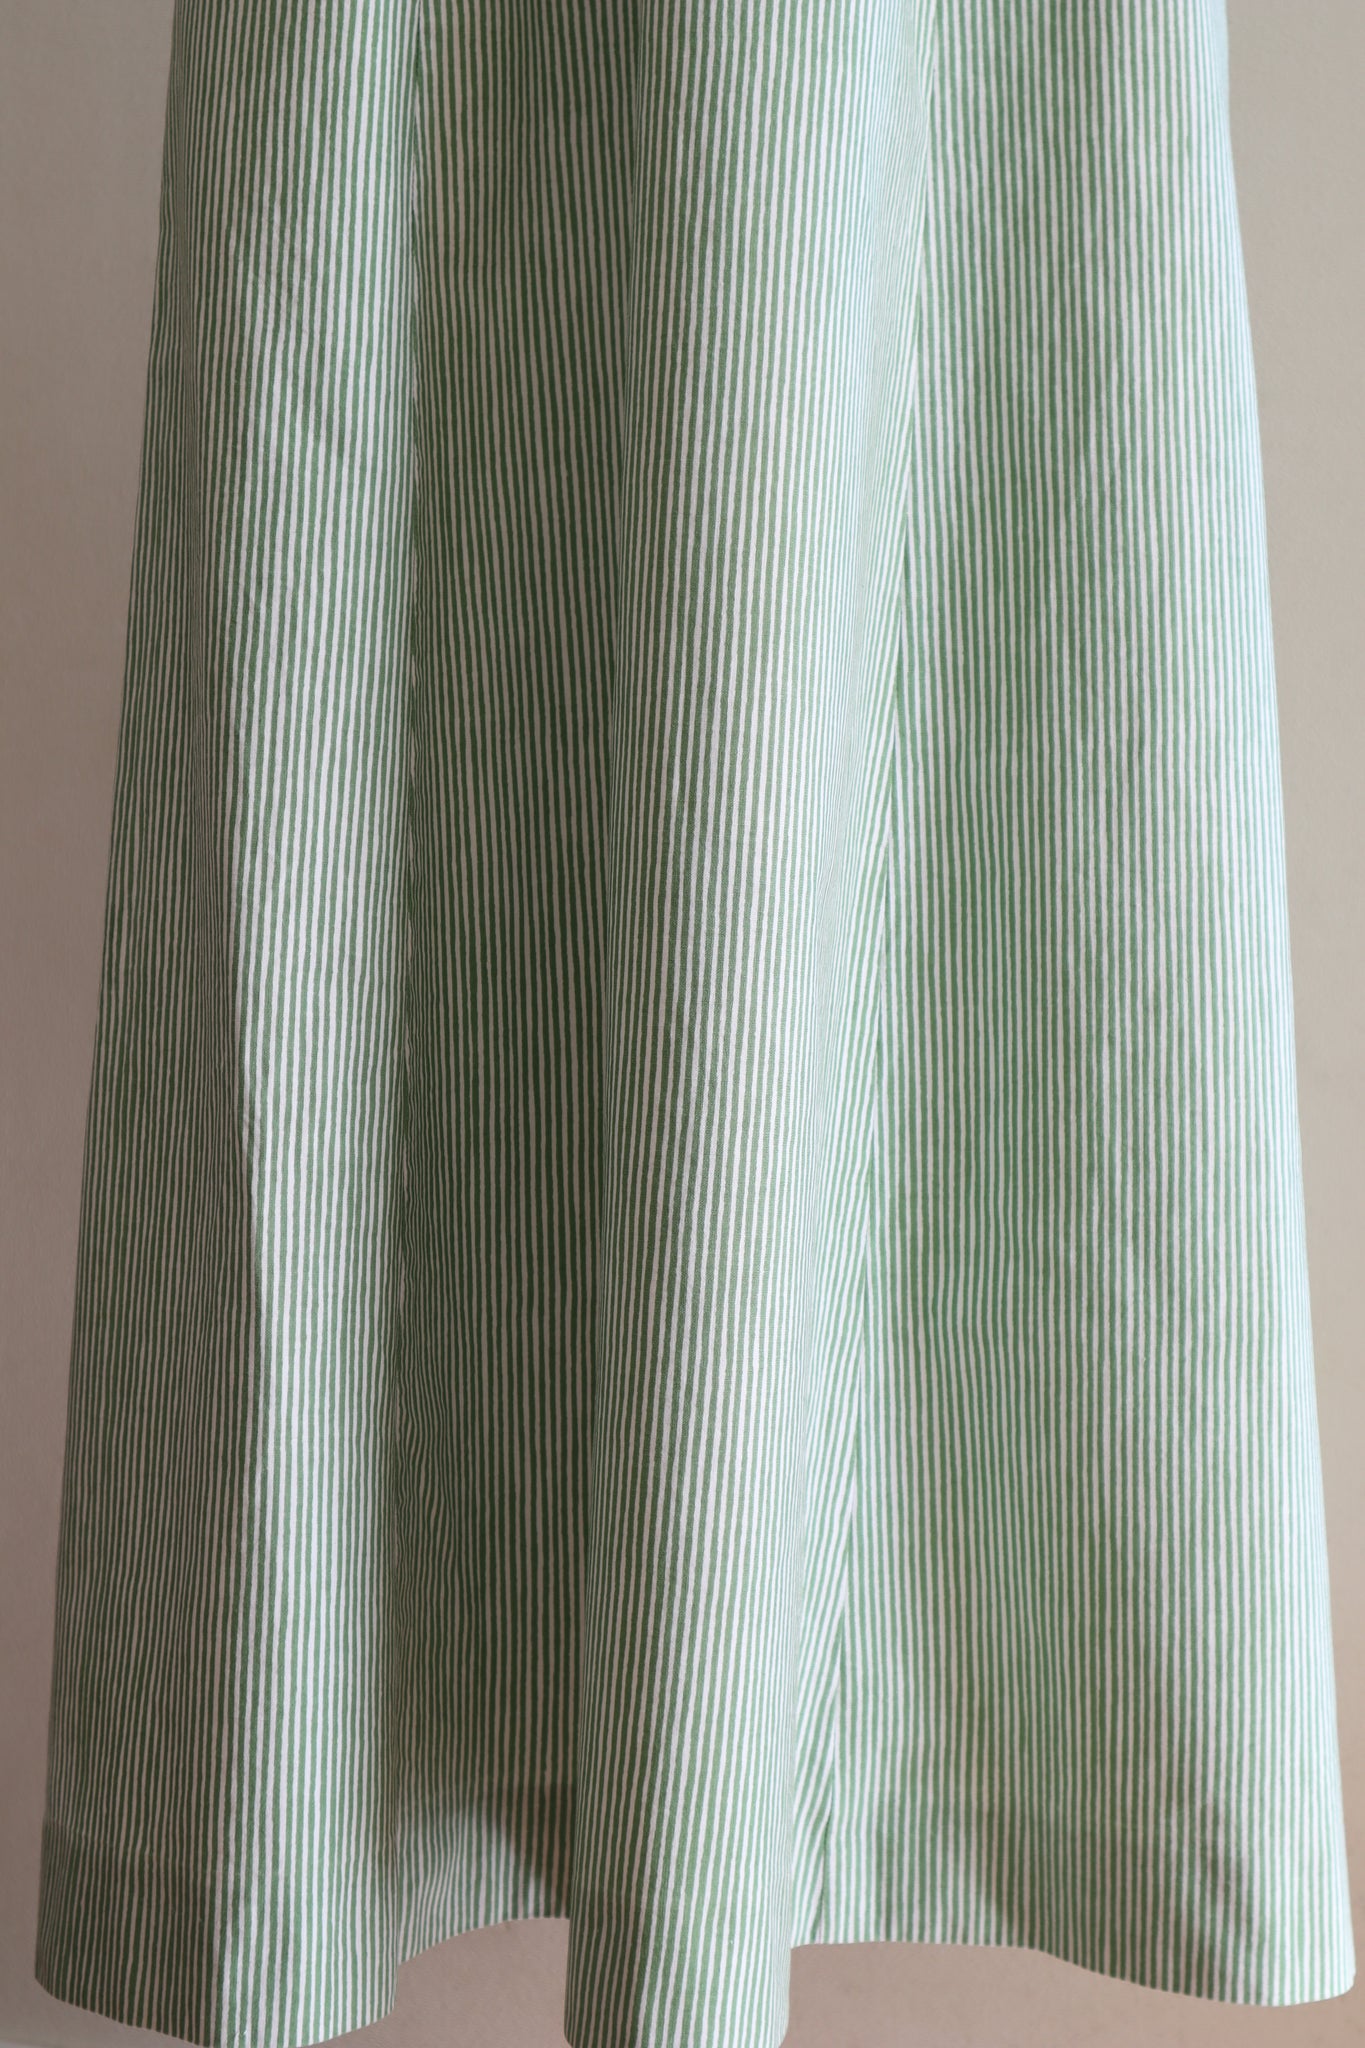 70s marimekko Green Striped Dress